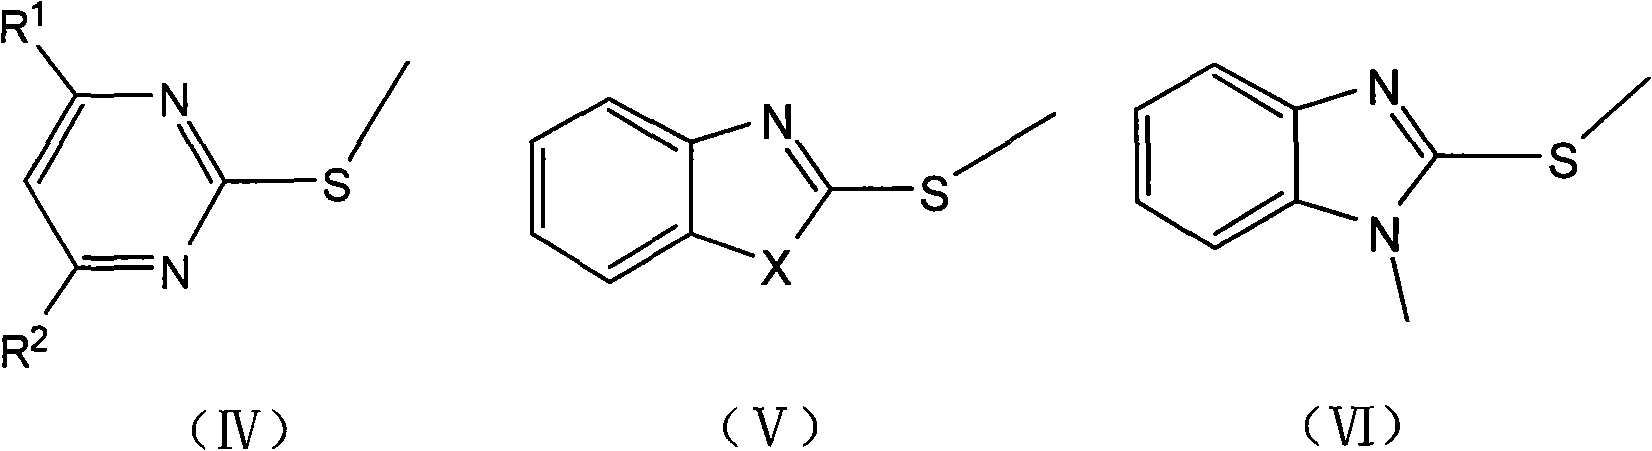 Method for preparing heterocyclic compounds of methyl mercapto under ionic liquid catalysis